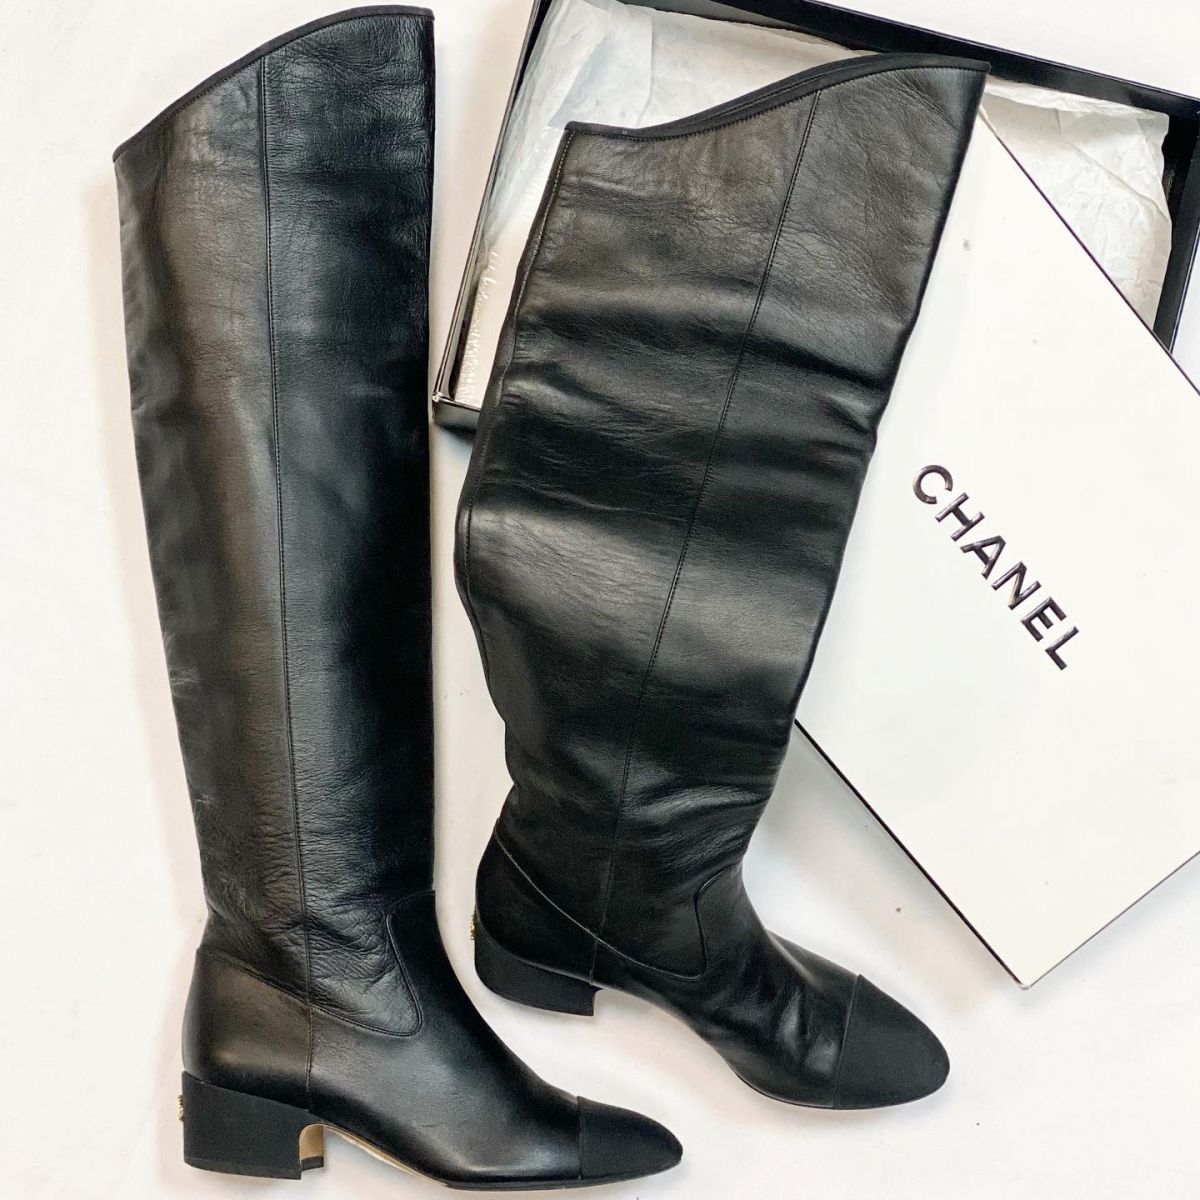 Ботфорты Chanel размер 37 цена 30 770 руб 